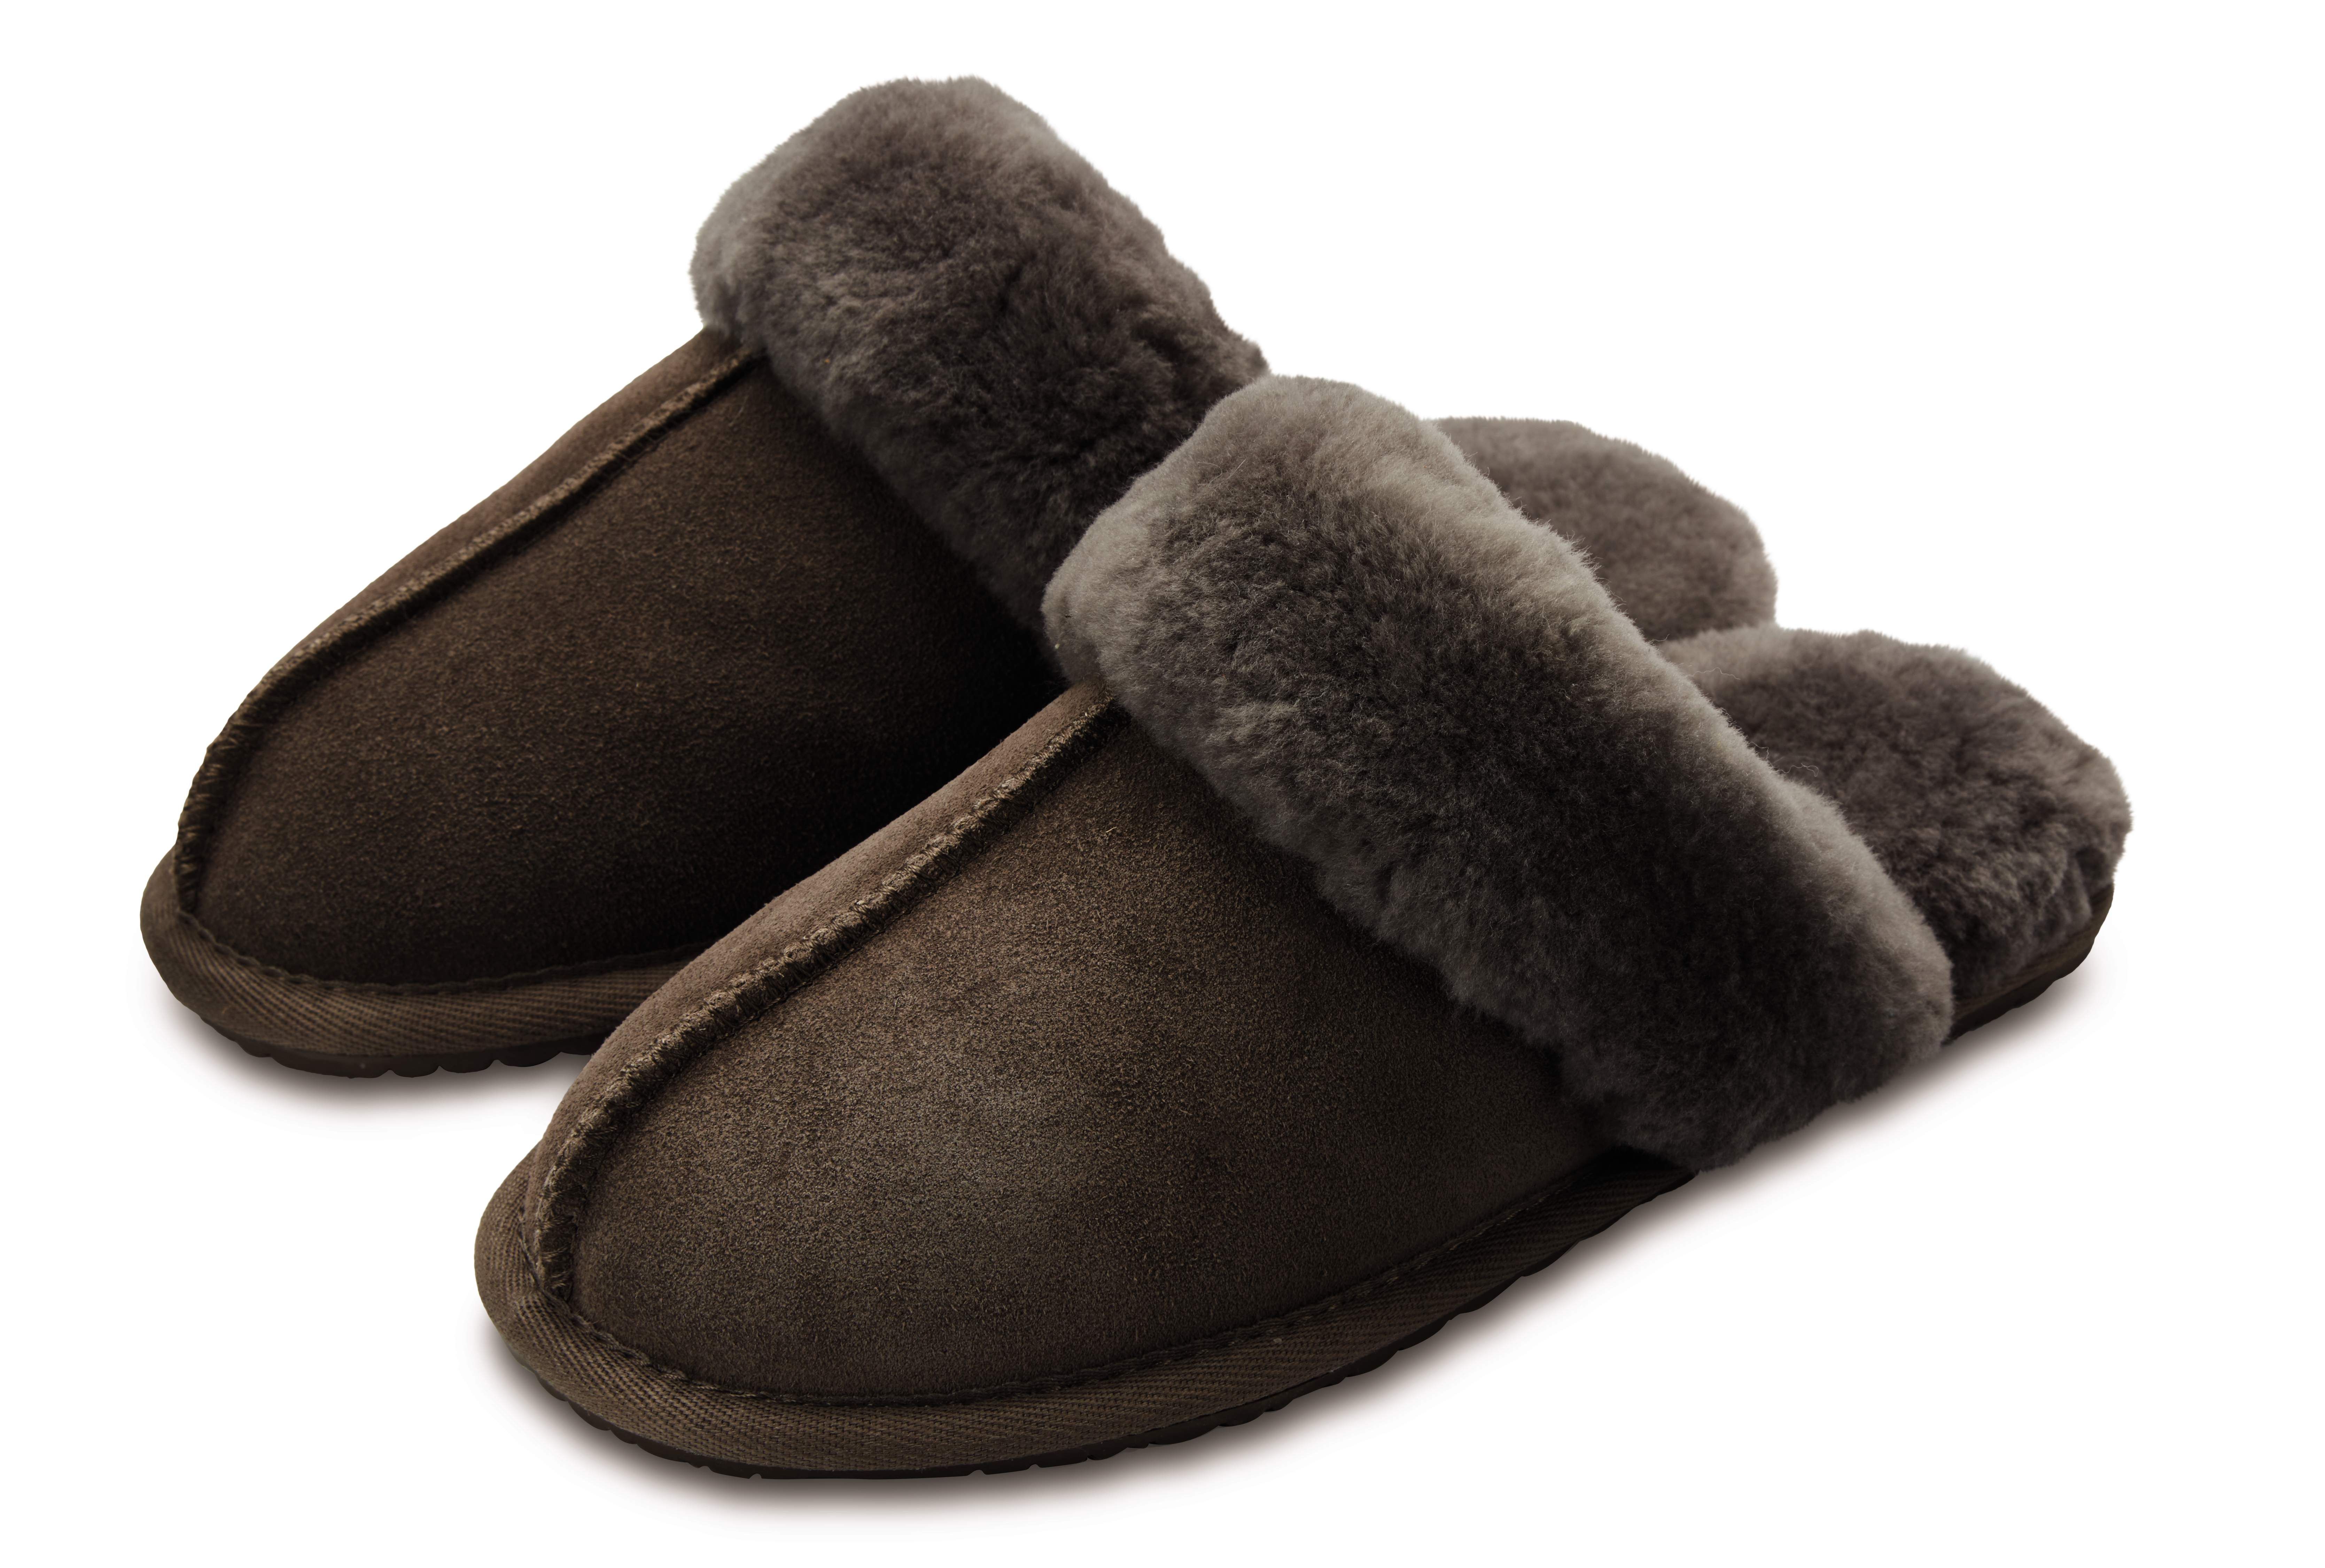 sheepskin slippers look like UGGs 